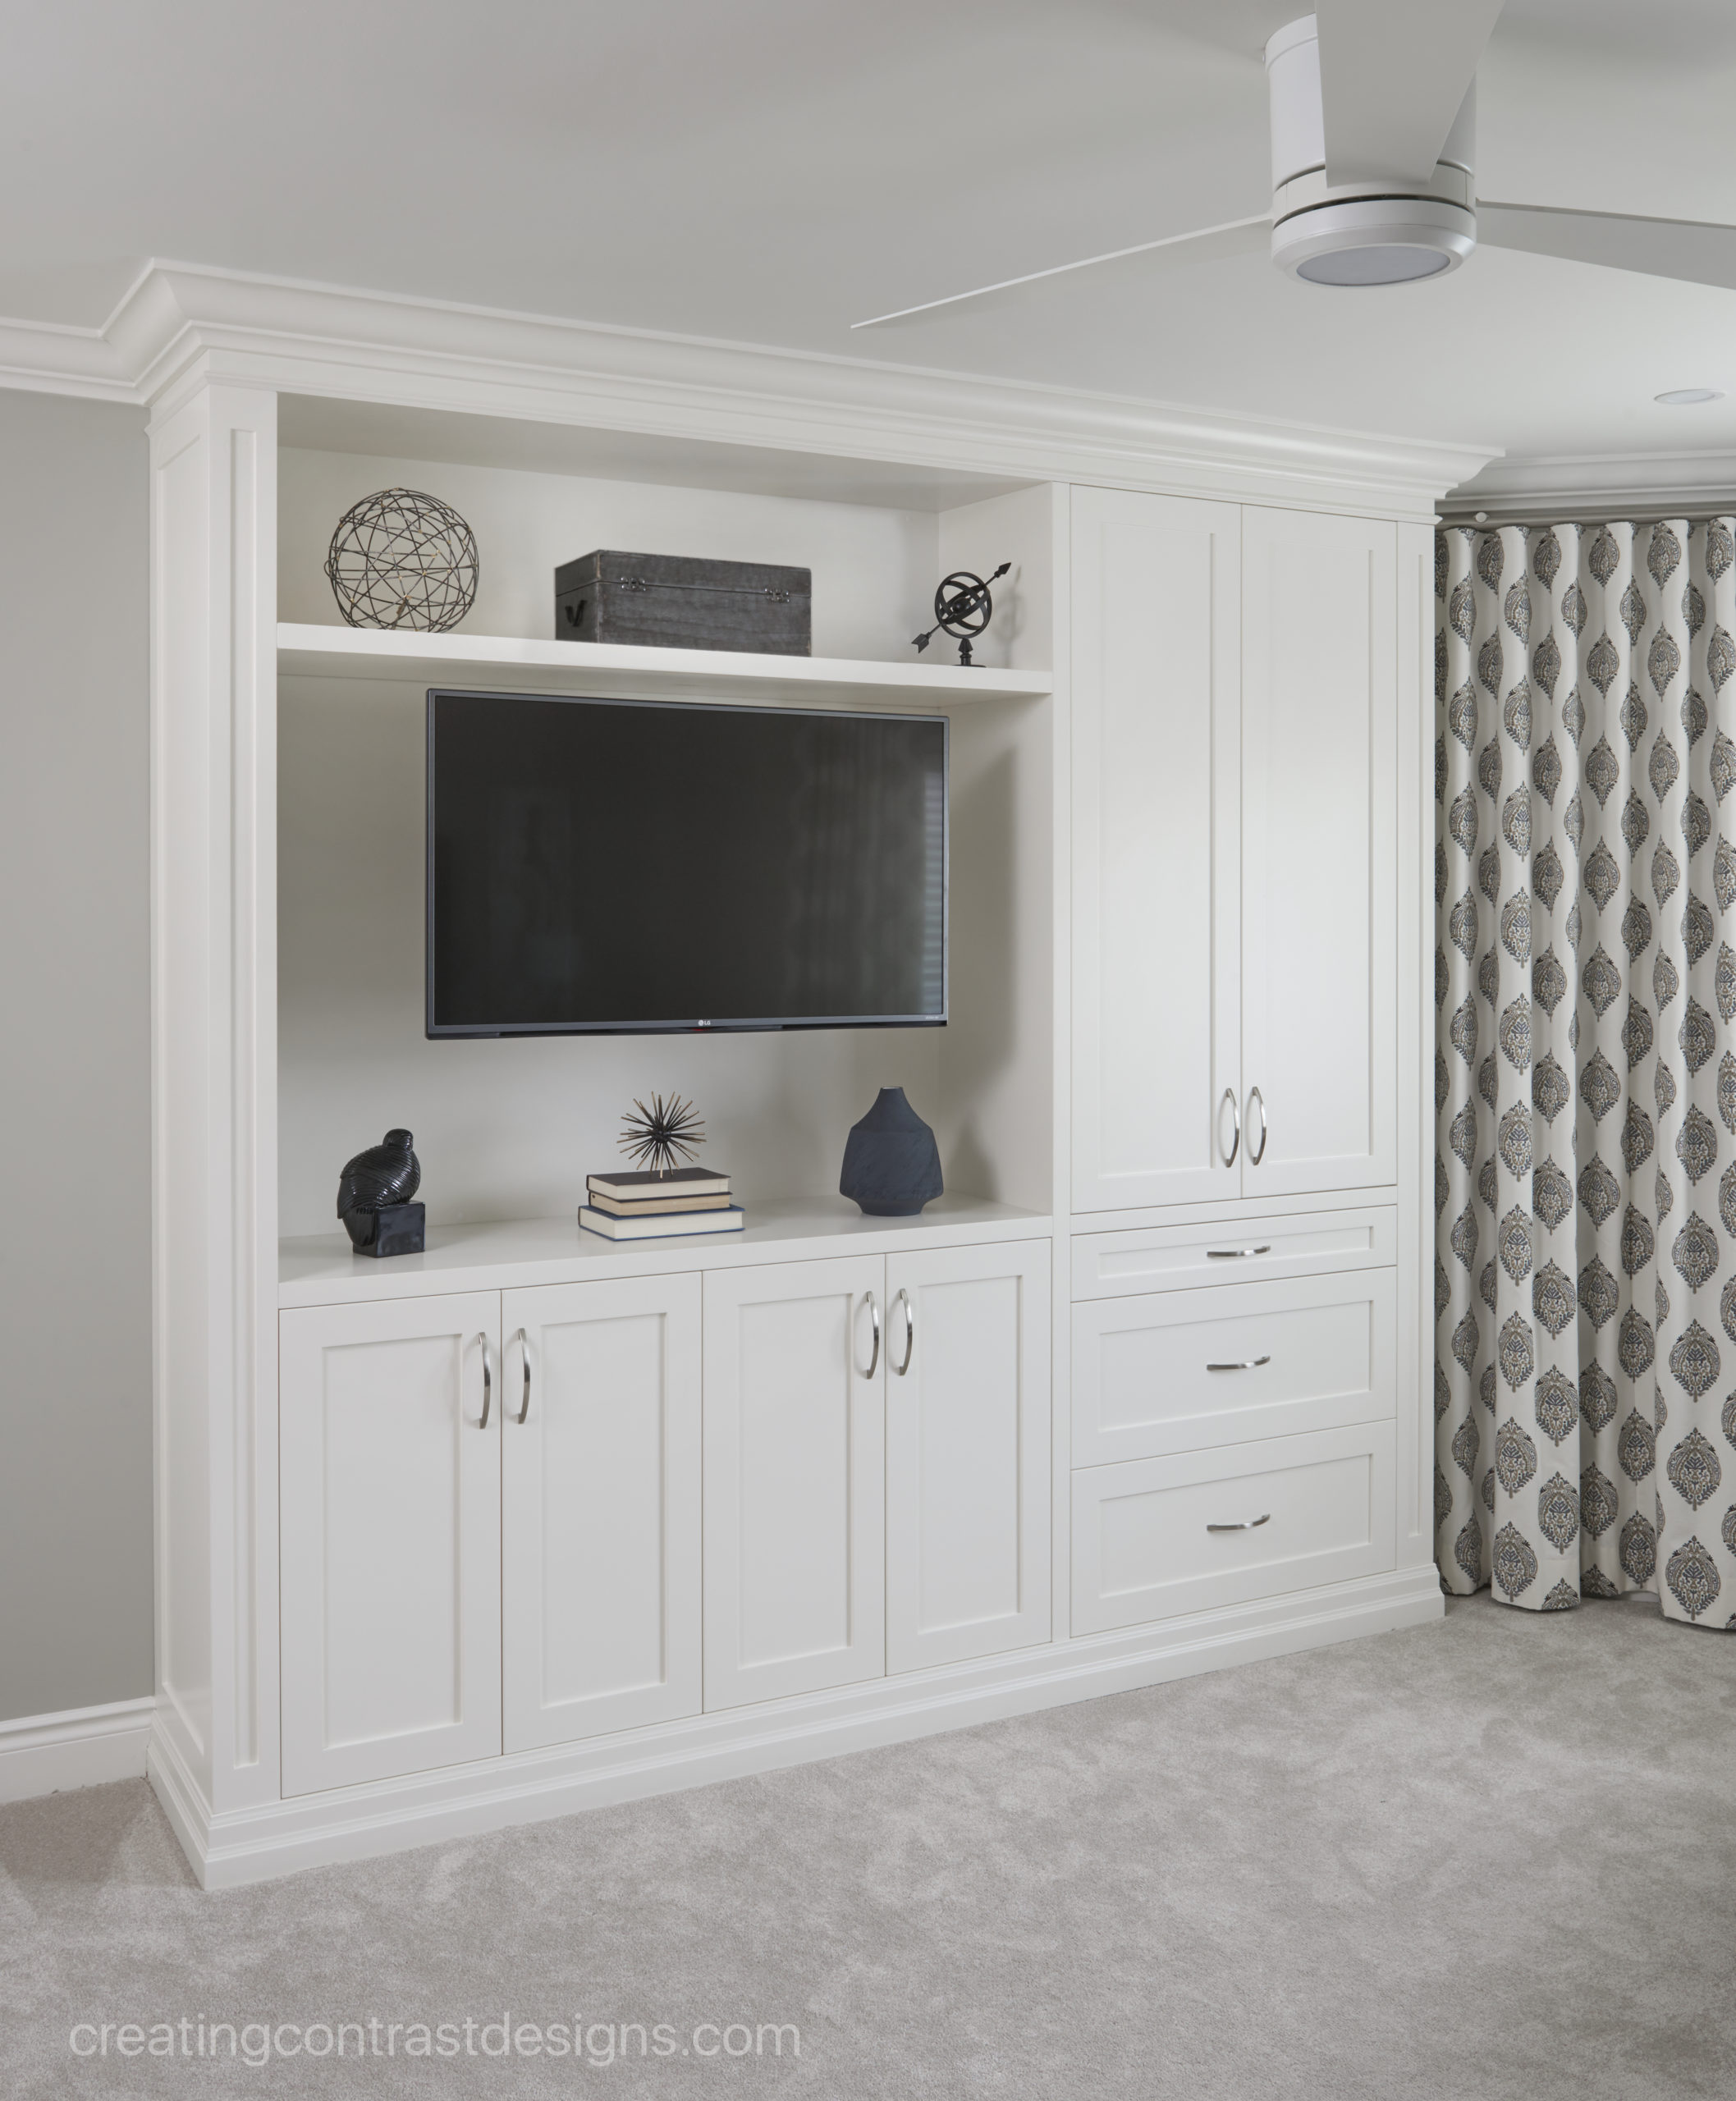 Custom Cabinetry in Cloud White by Benjamin Moore.